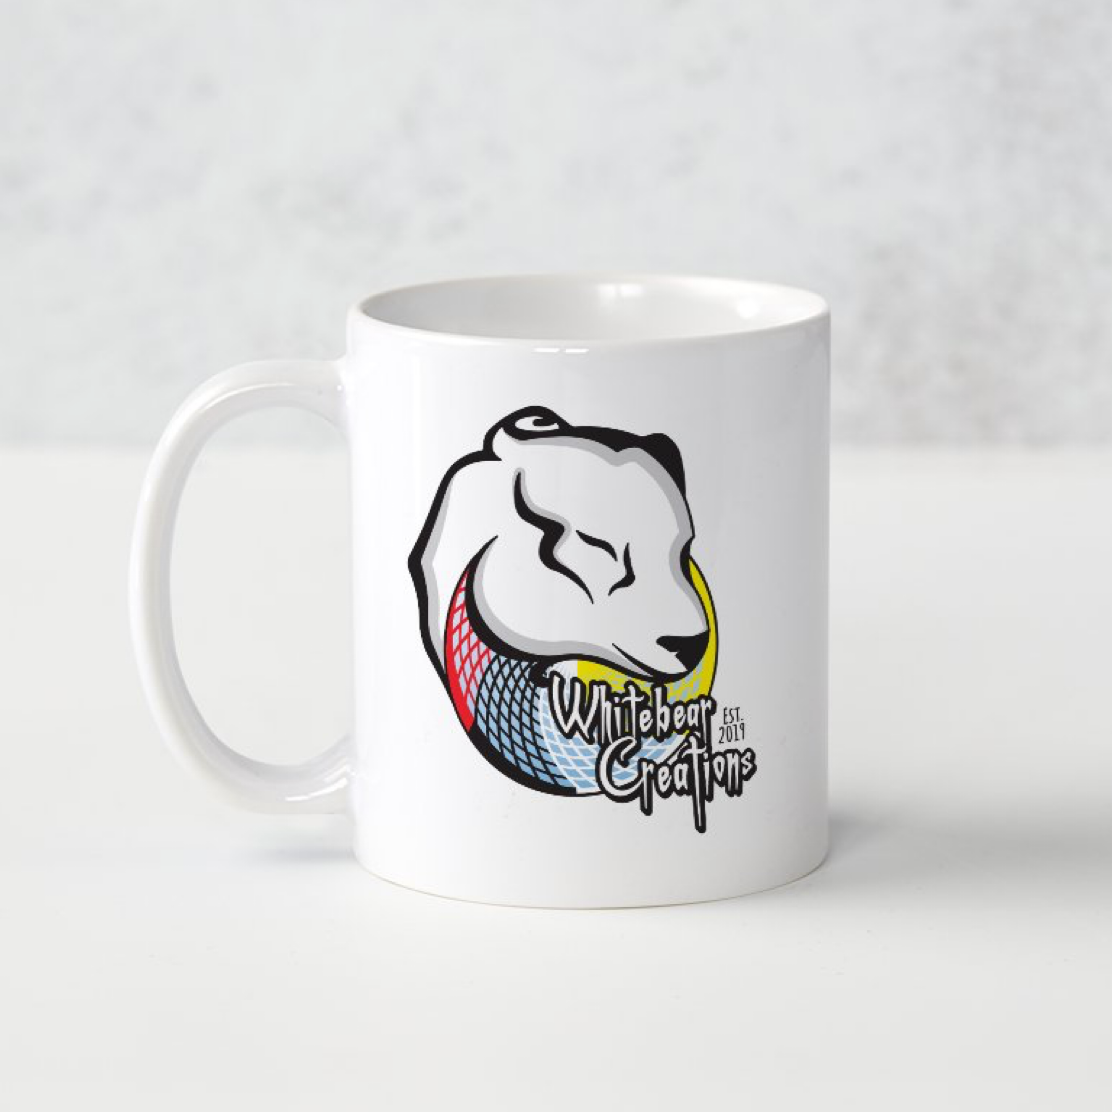 Whitebear Creations Mug